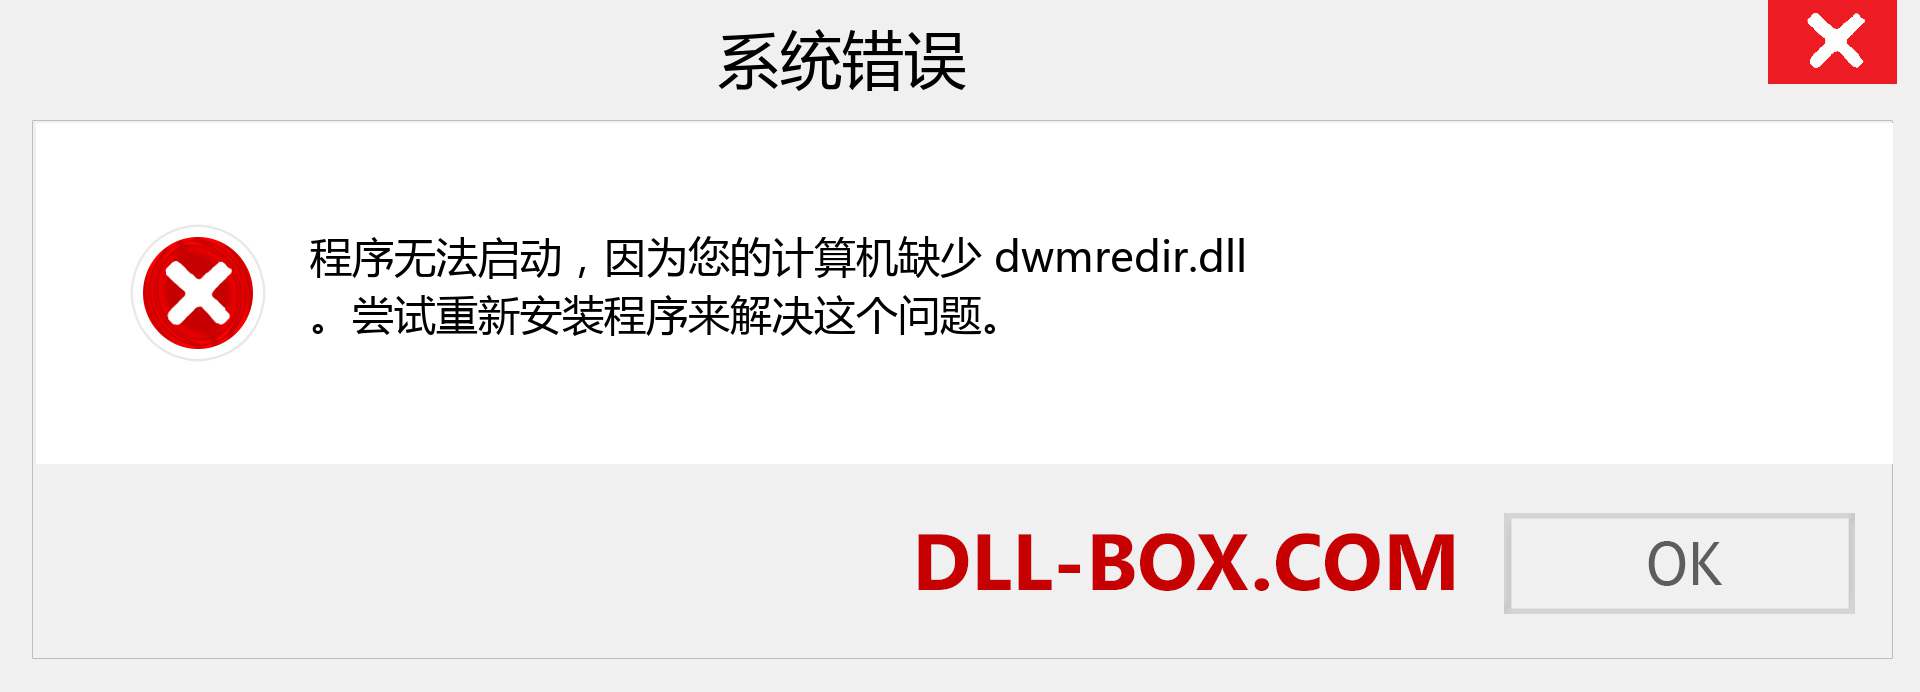 dwmredir.dll 文件丢失？。 适用于 Windows 7、8、10 的下载 - 修复 Windows、照片、图像上的 dwmredir dll 丢失错误